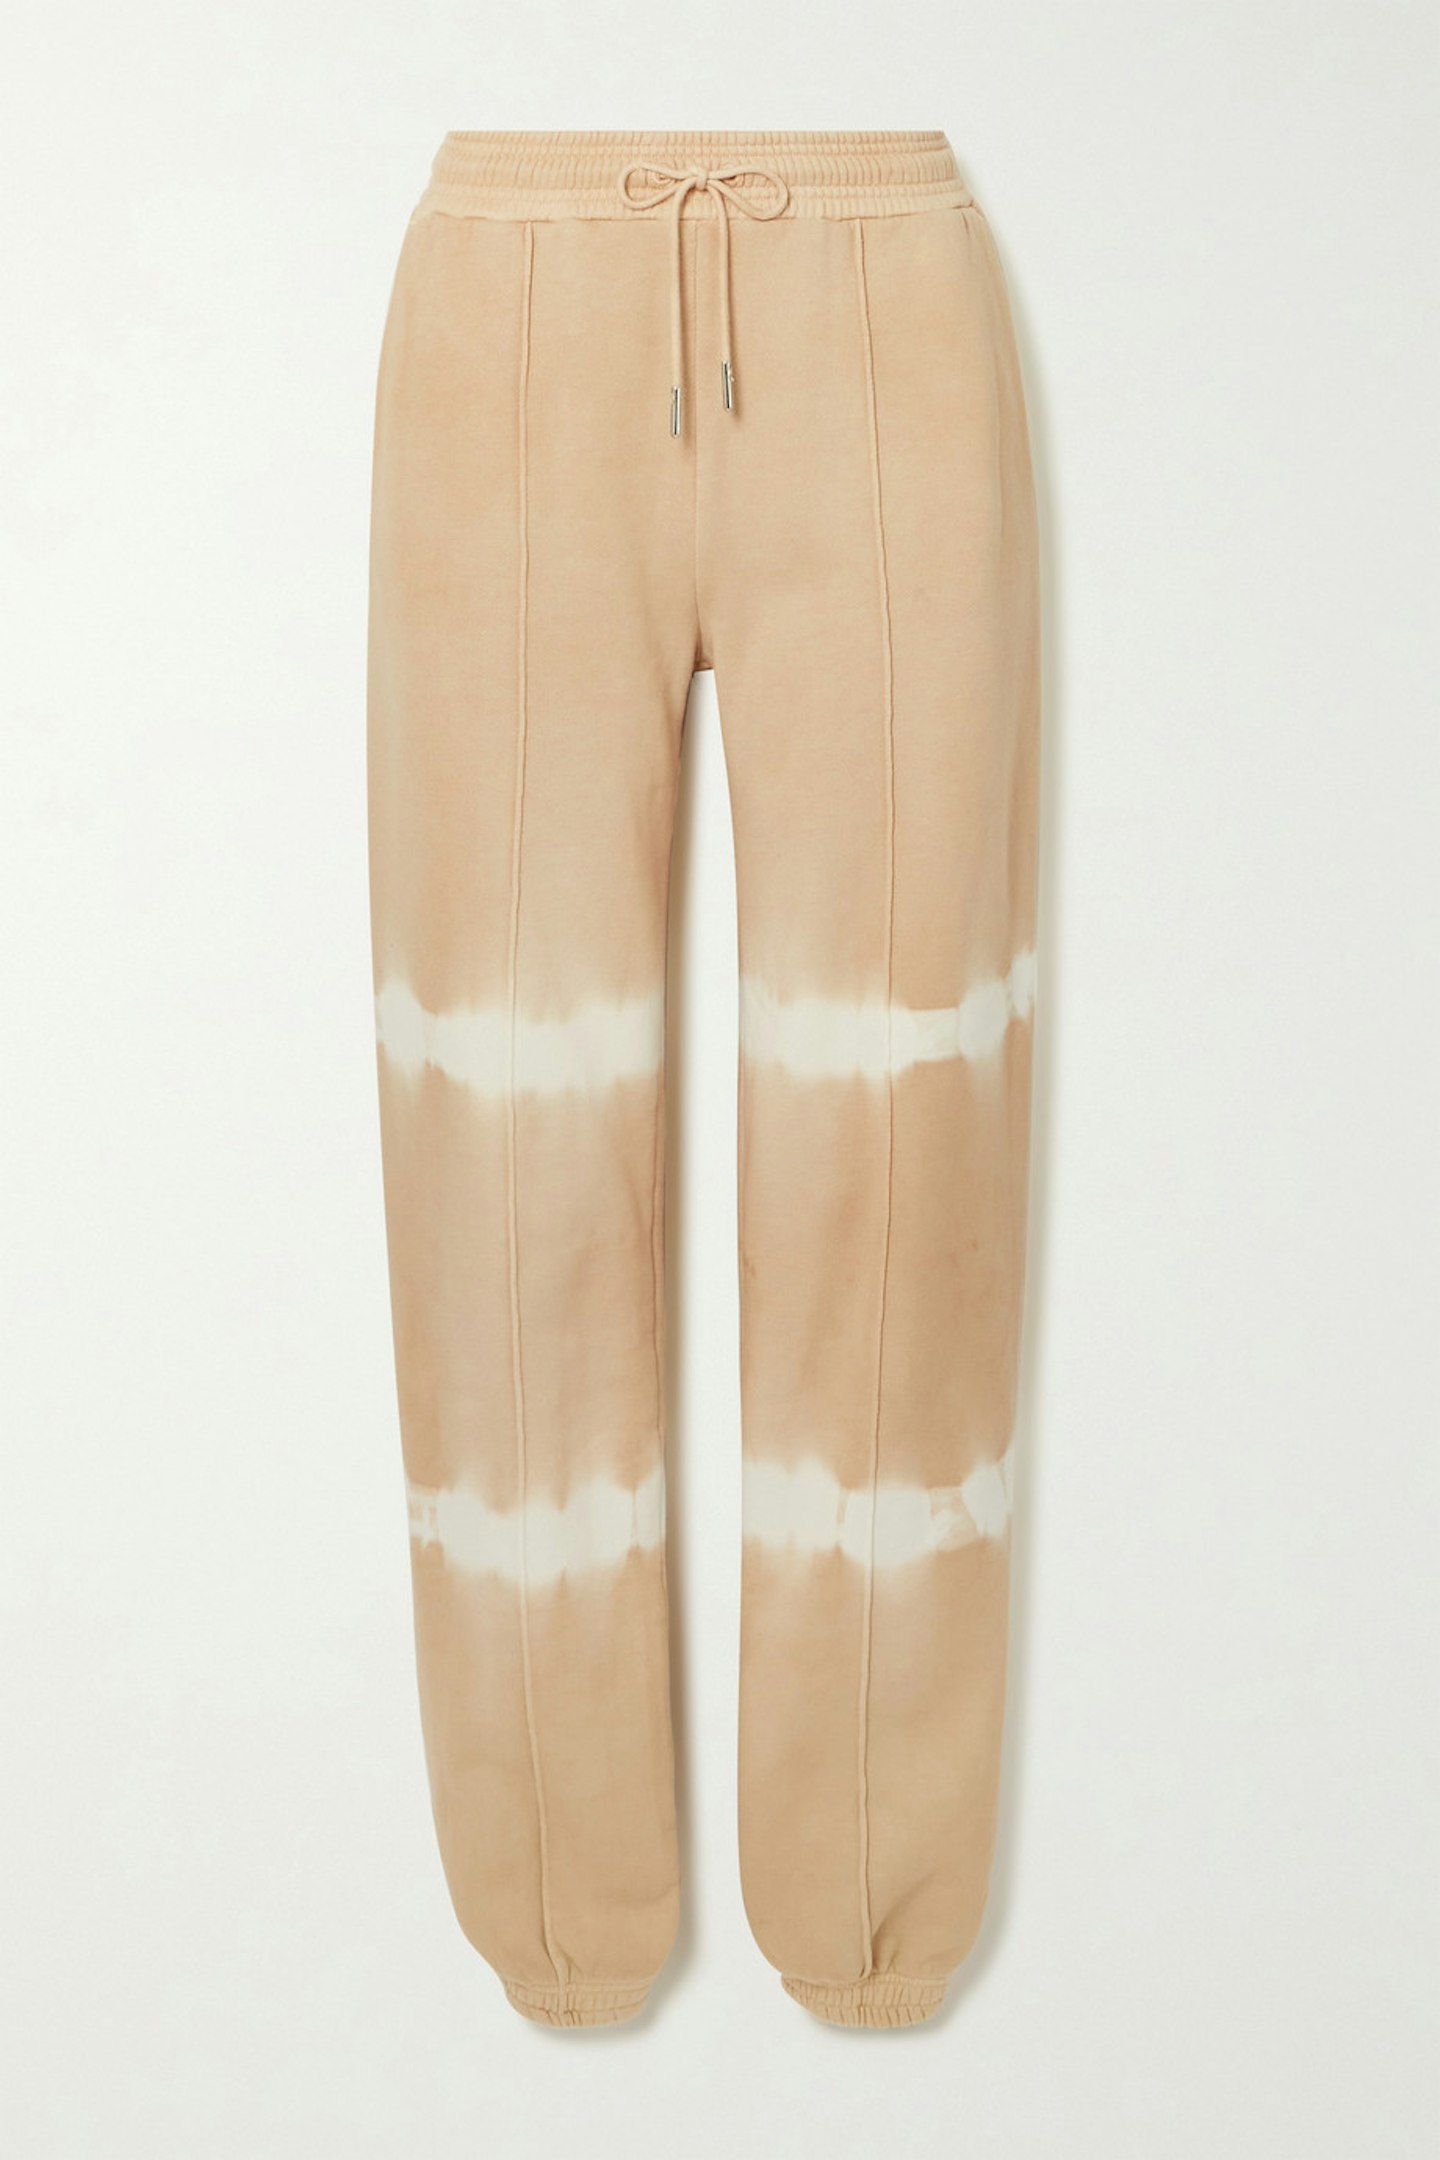 Ninety Percent, Tie-Dyed Organic Cotton-Jersey Track Pants, £91